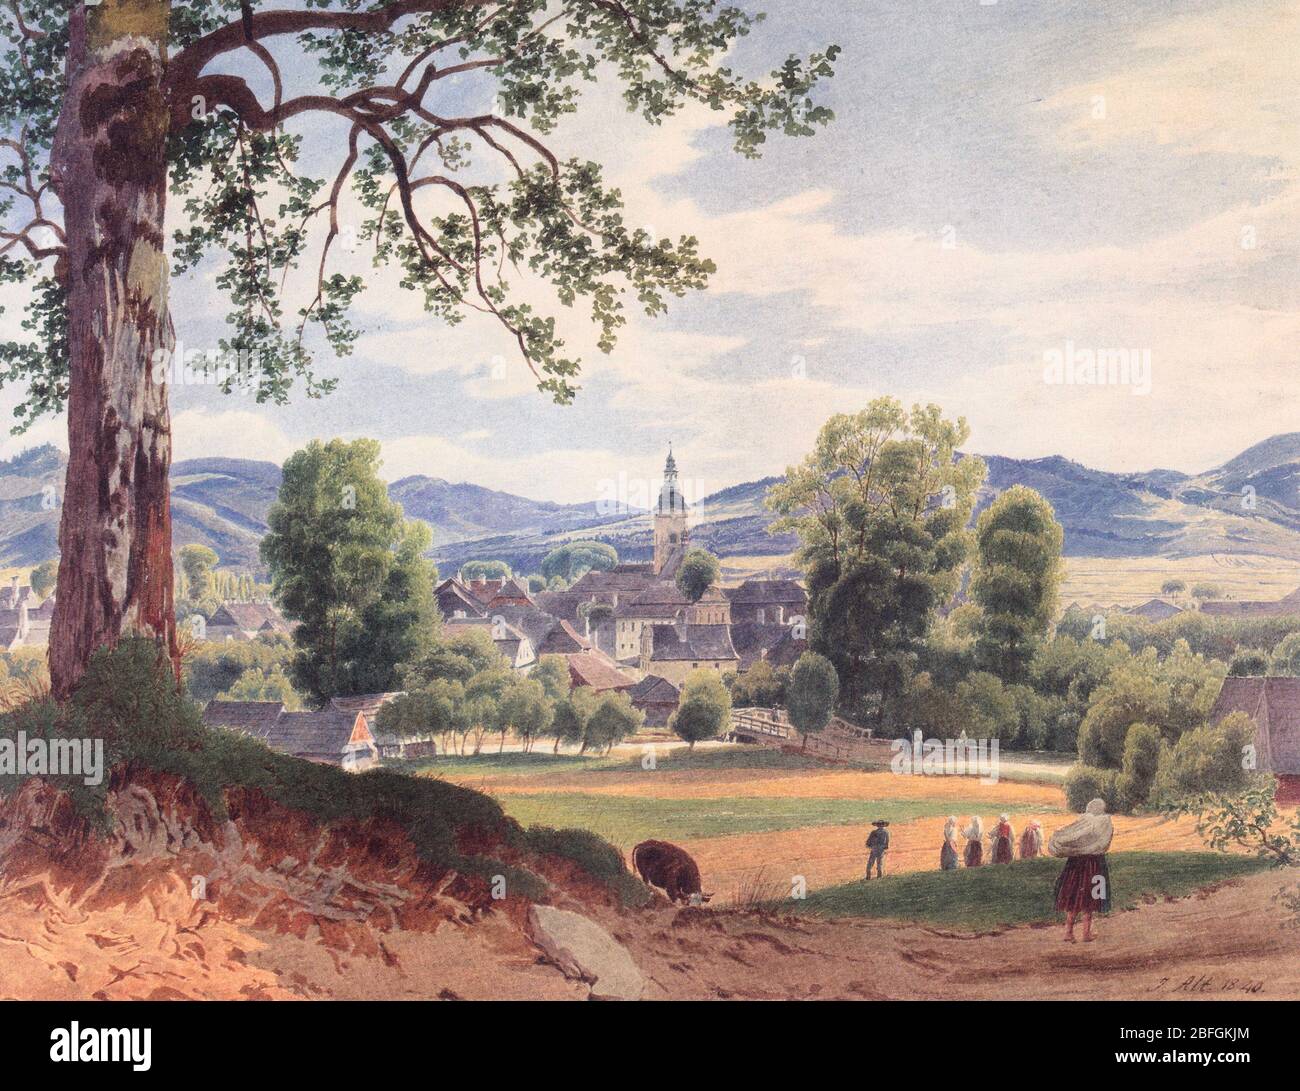 La ciudad de Jablunkau en el Teschner Kreis - Jakob Alt, 1840 Foto de stock